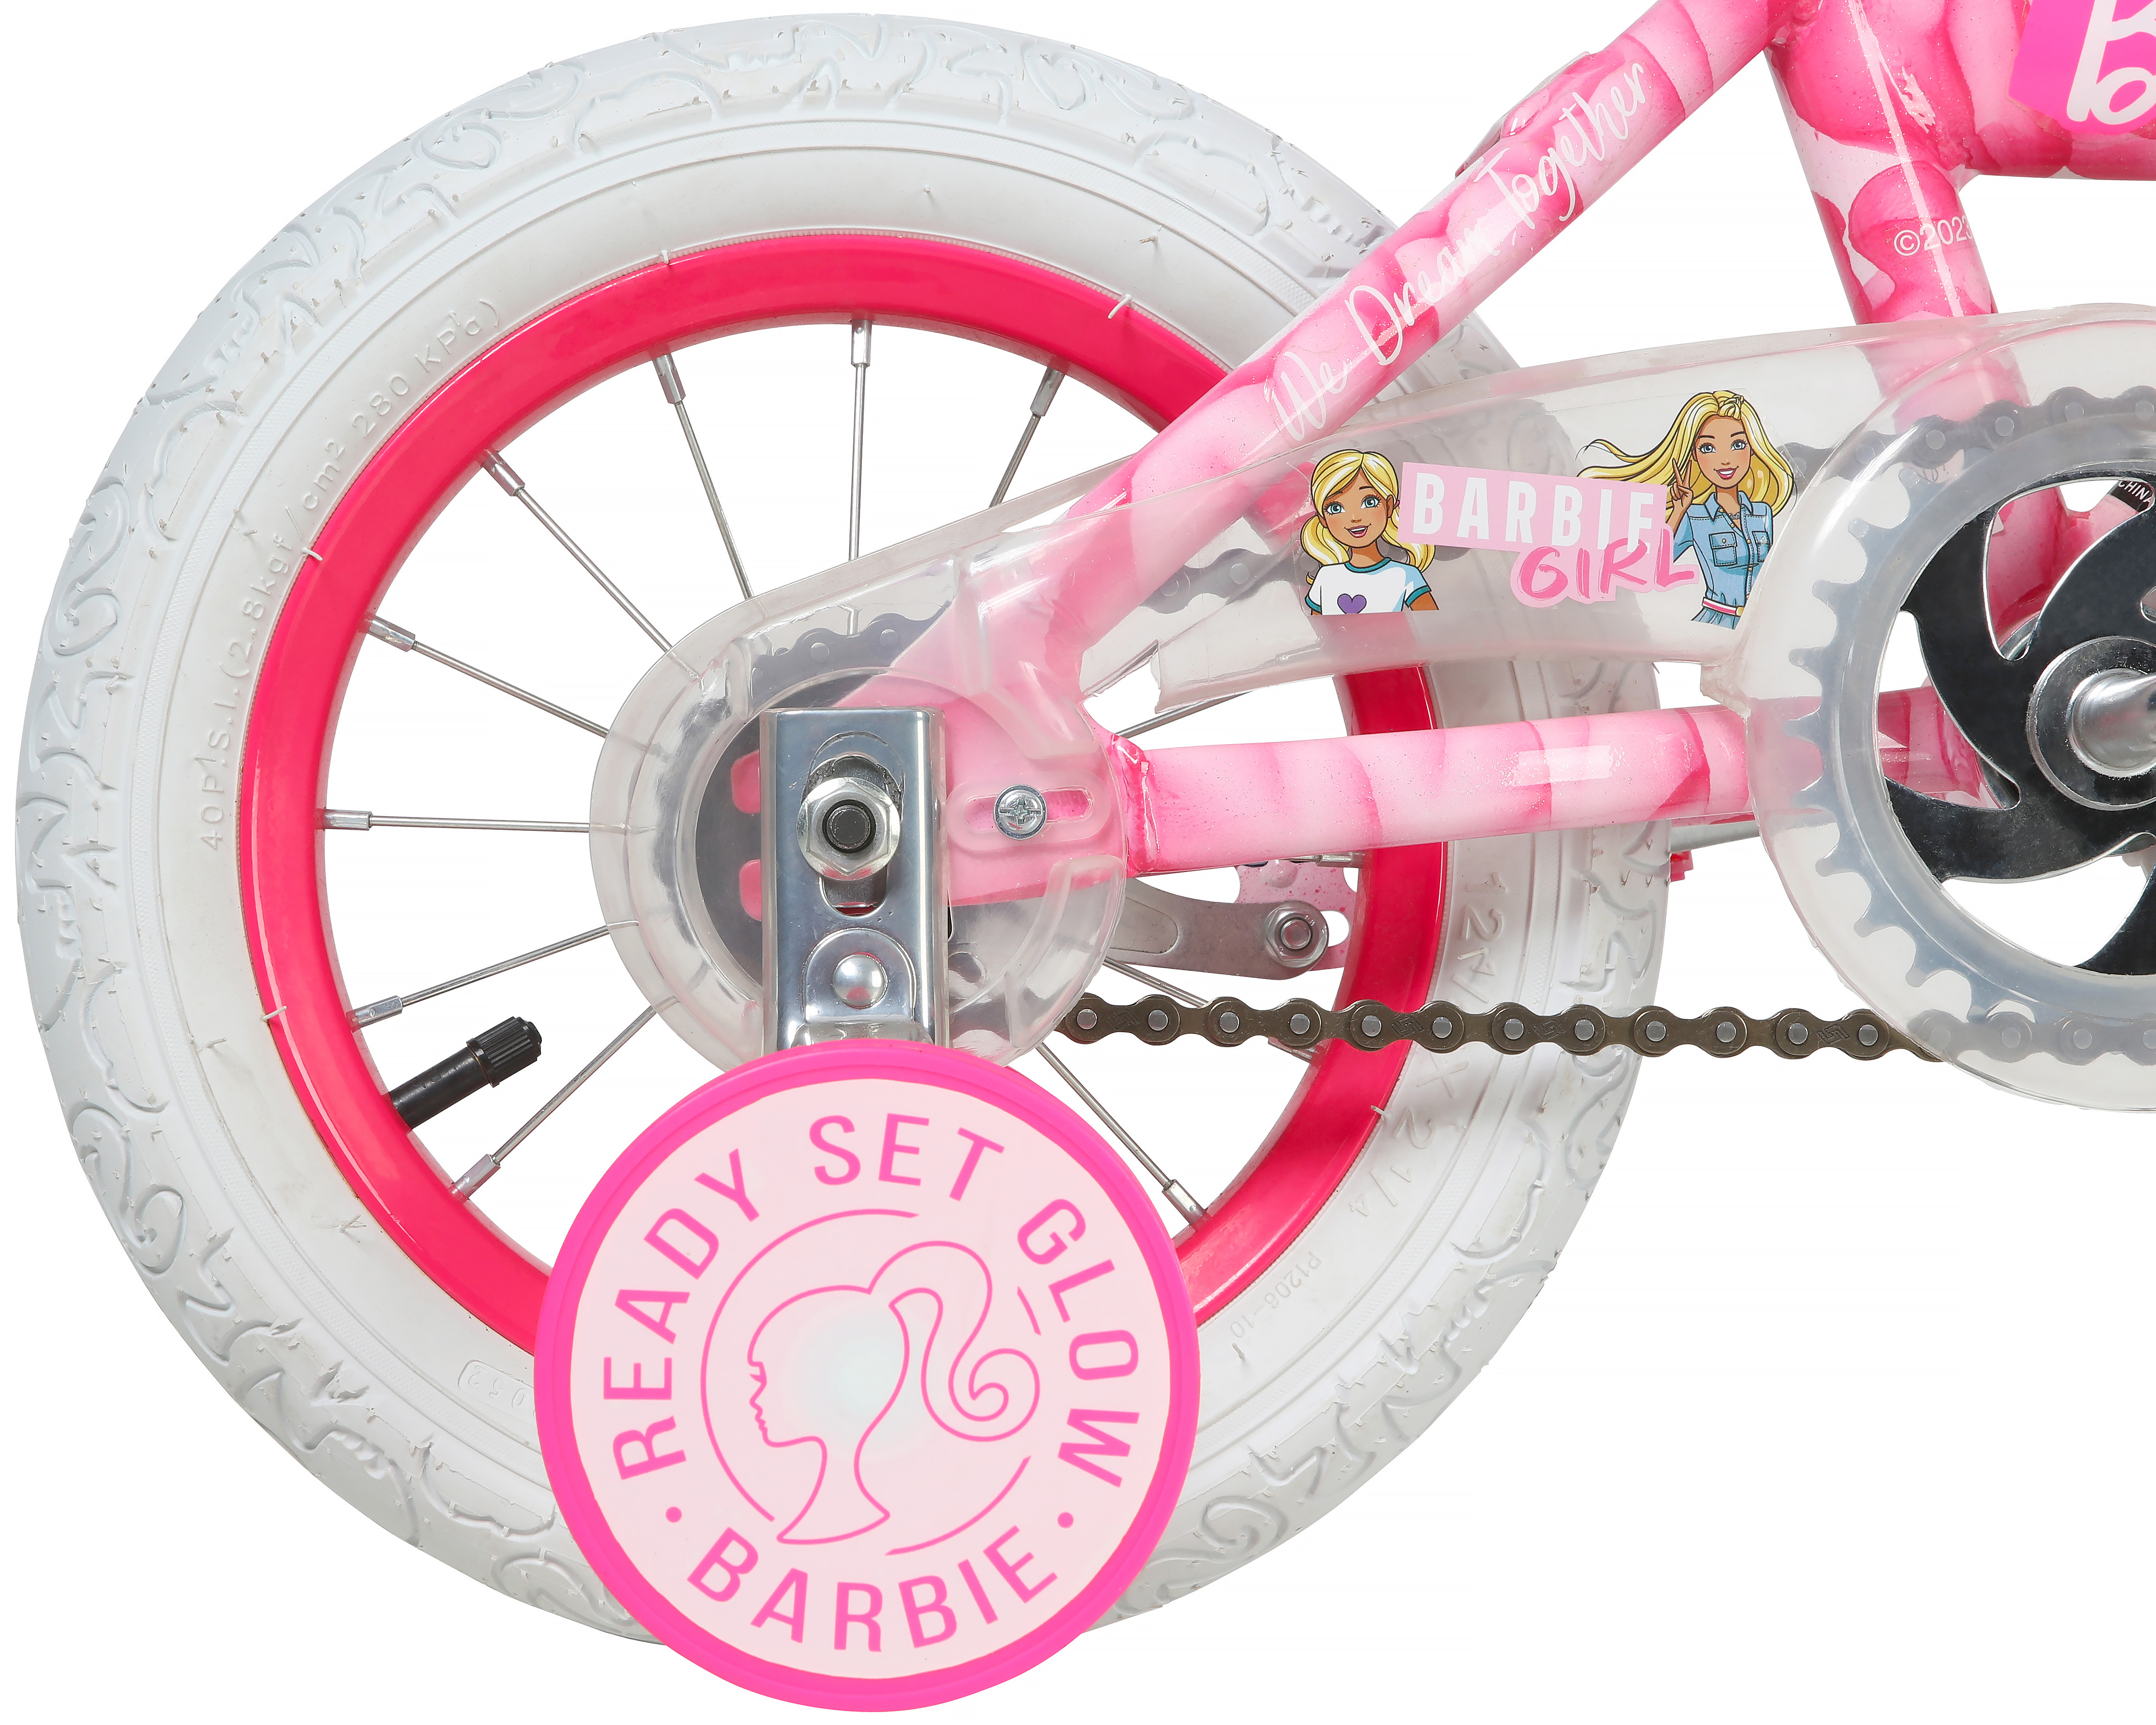 Dynacraft Barbie 12-inch Girls BMX Bike for Age 3-5 Years - image 3 of 7